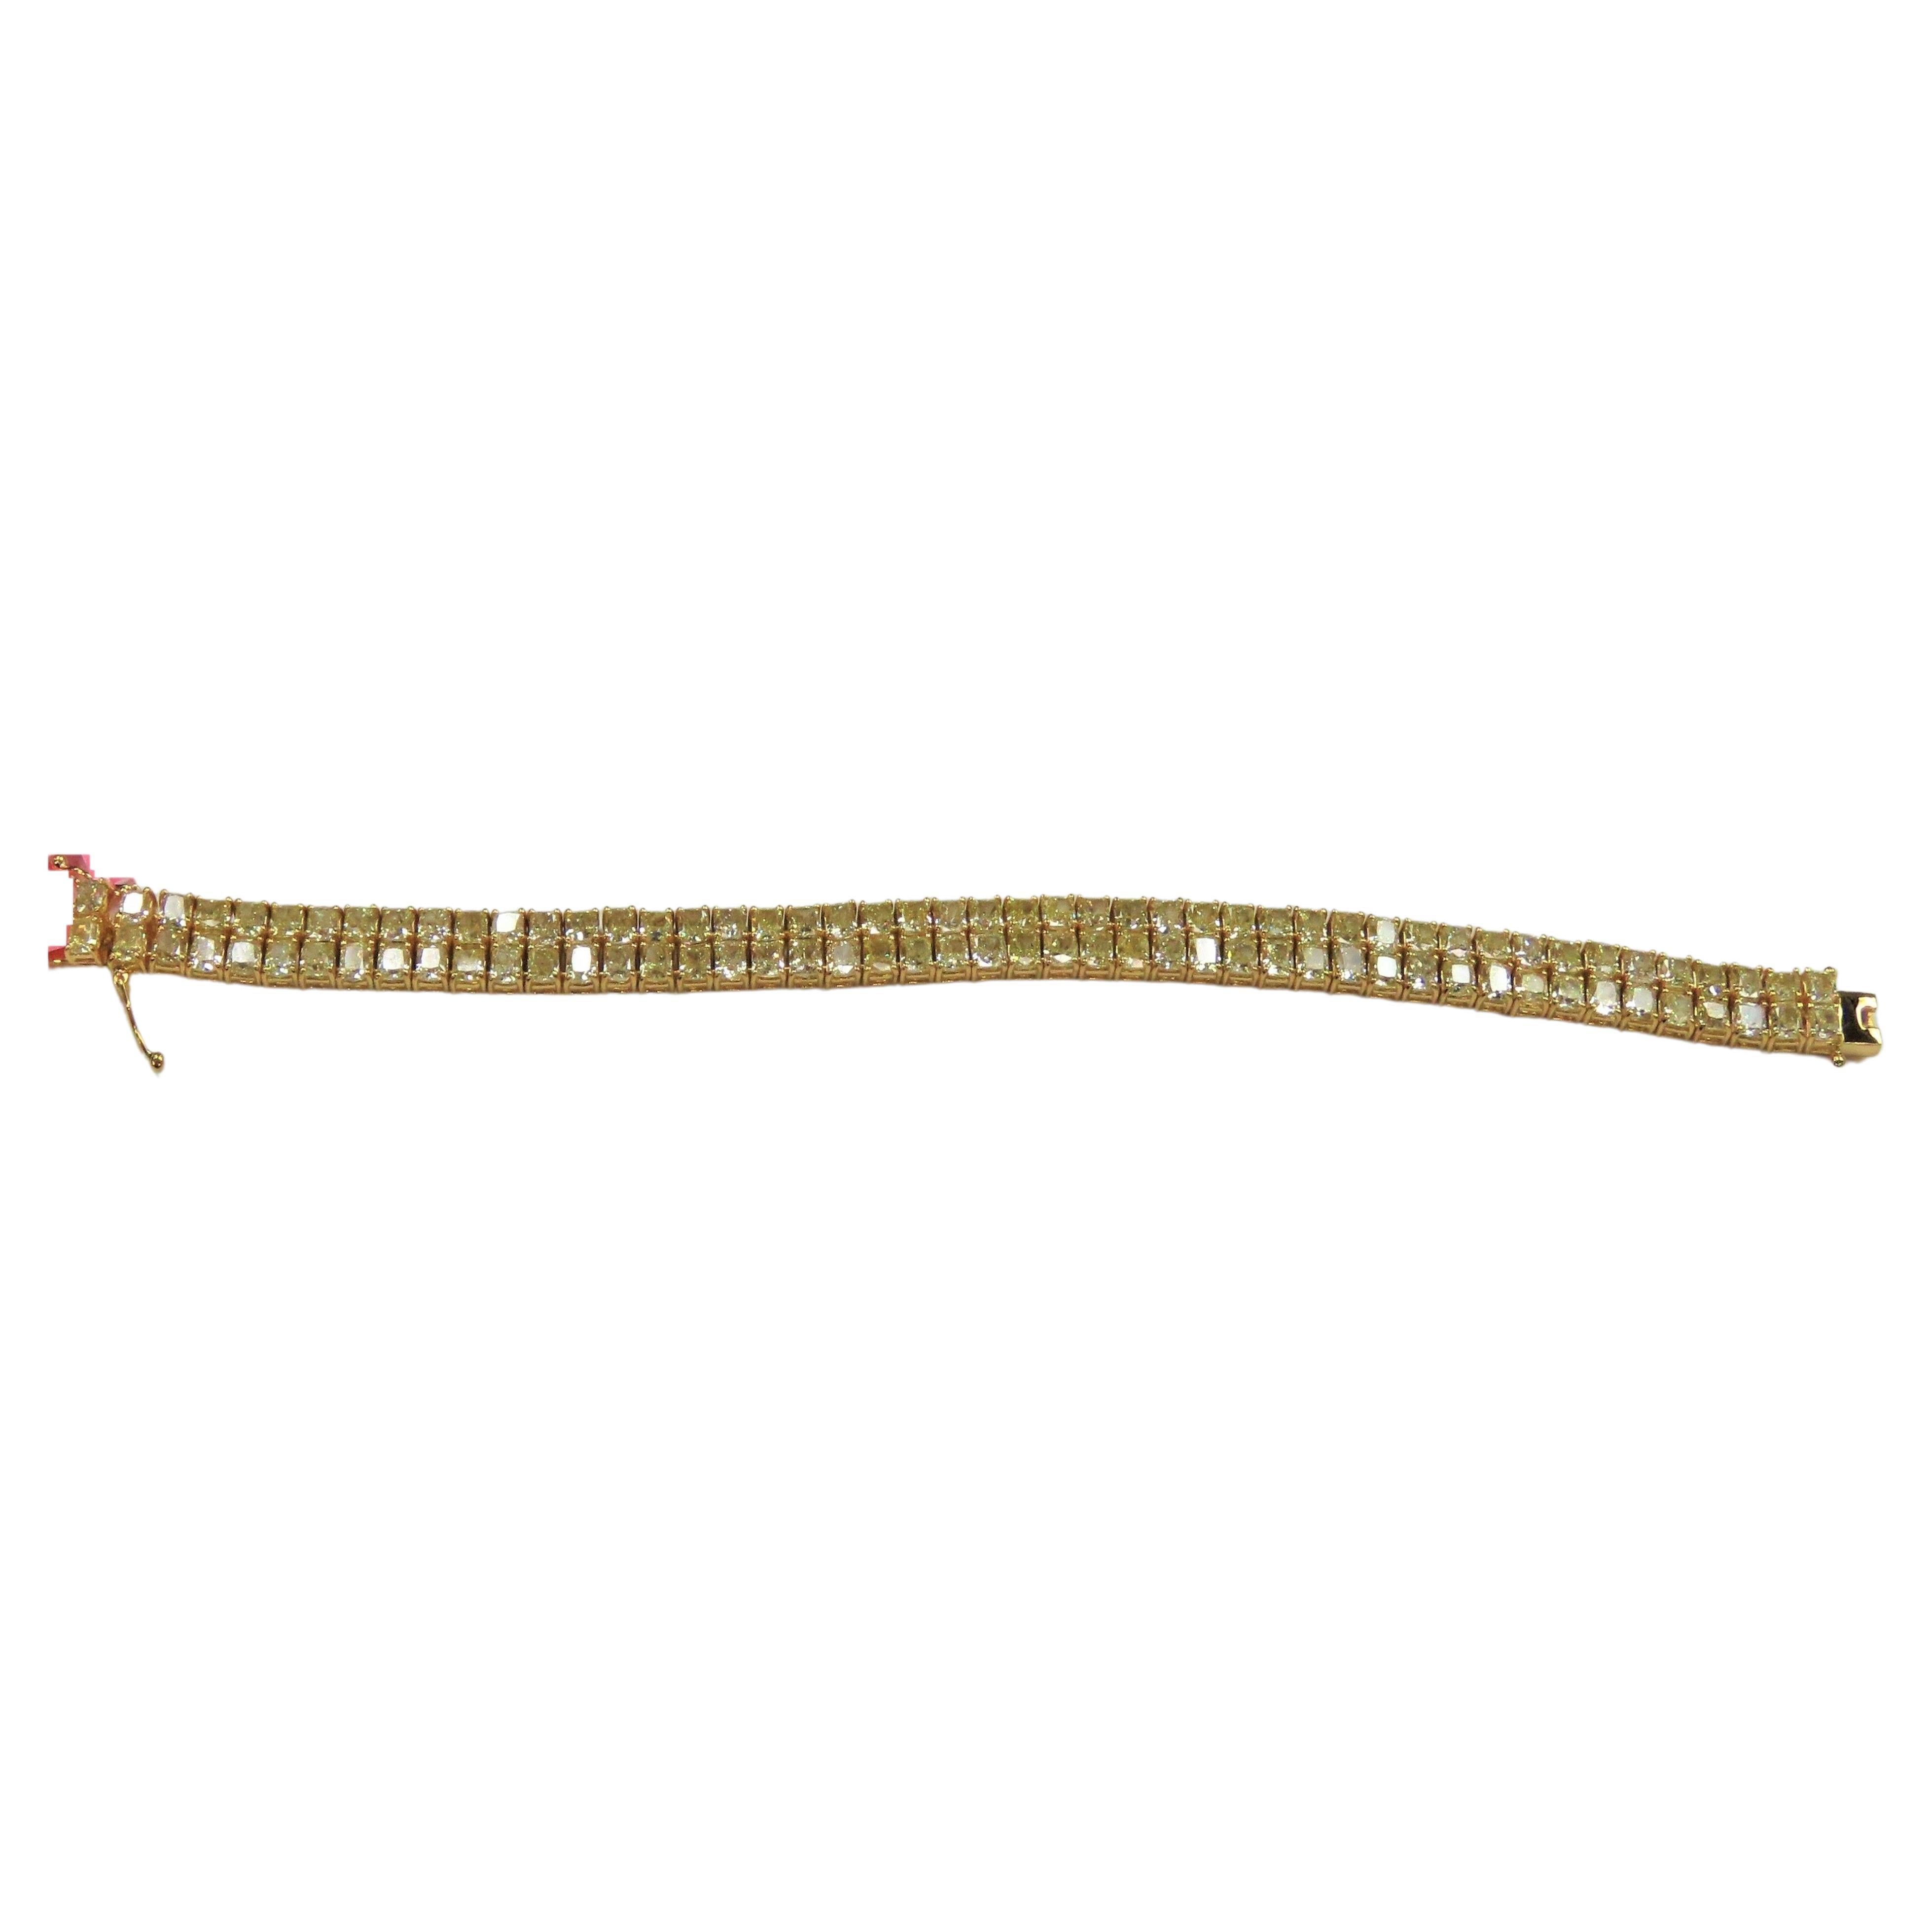 Nwt $137, 644 Rare Fancy 18kt Gold Gorgeous 24ct Fancy Yellow Diamond Bracelet